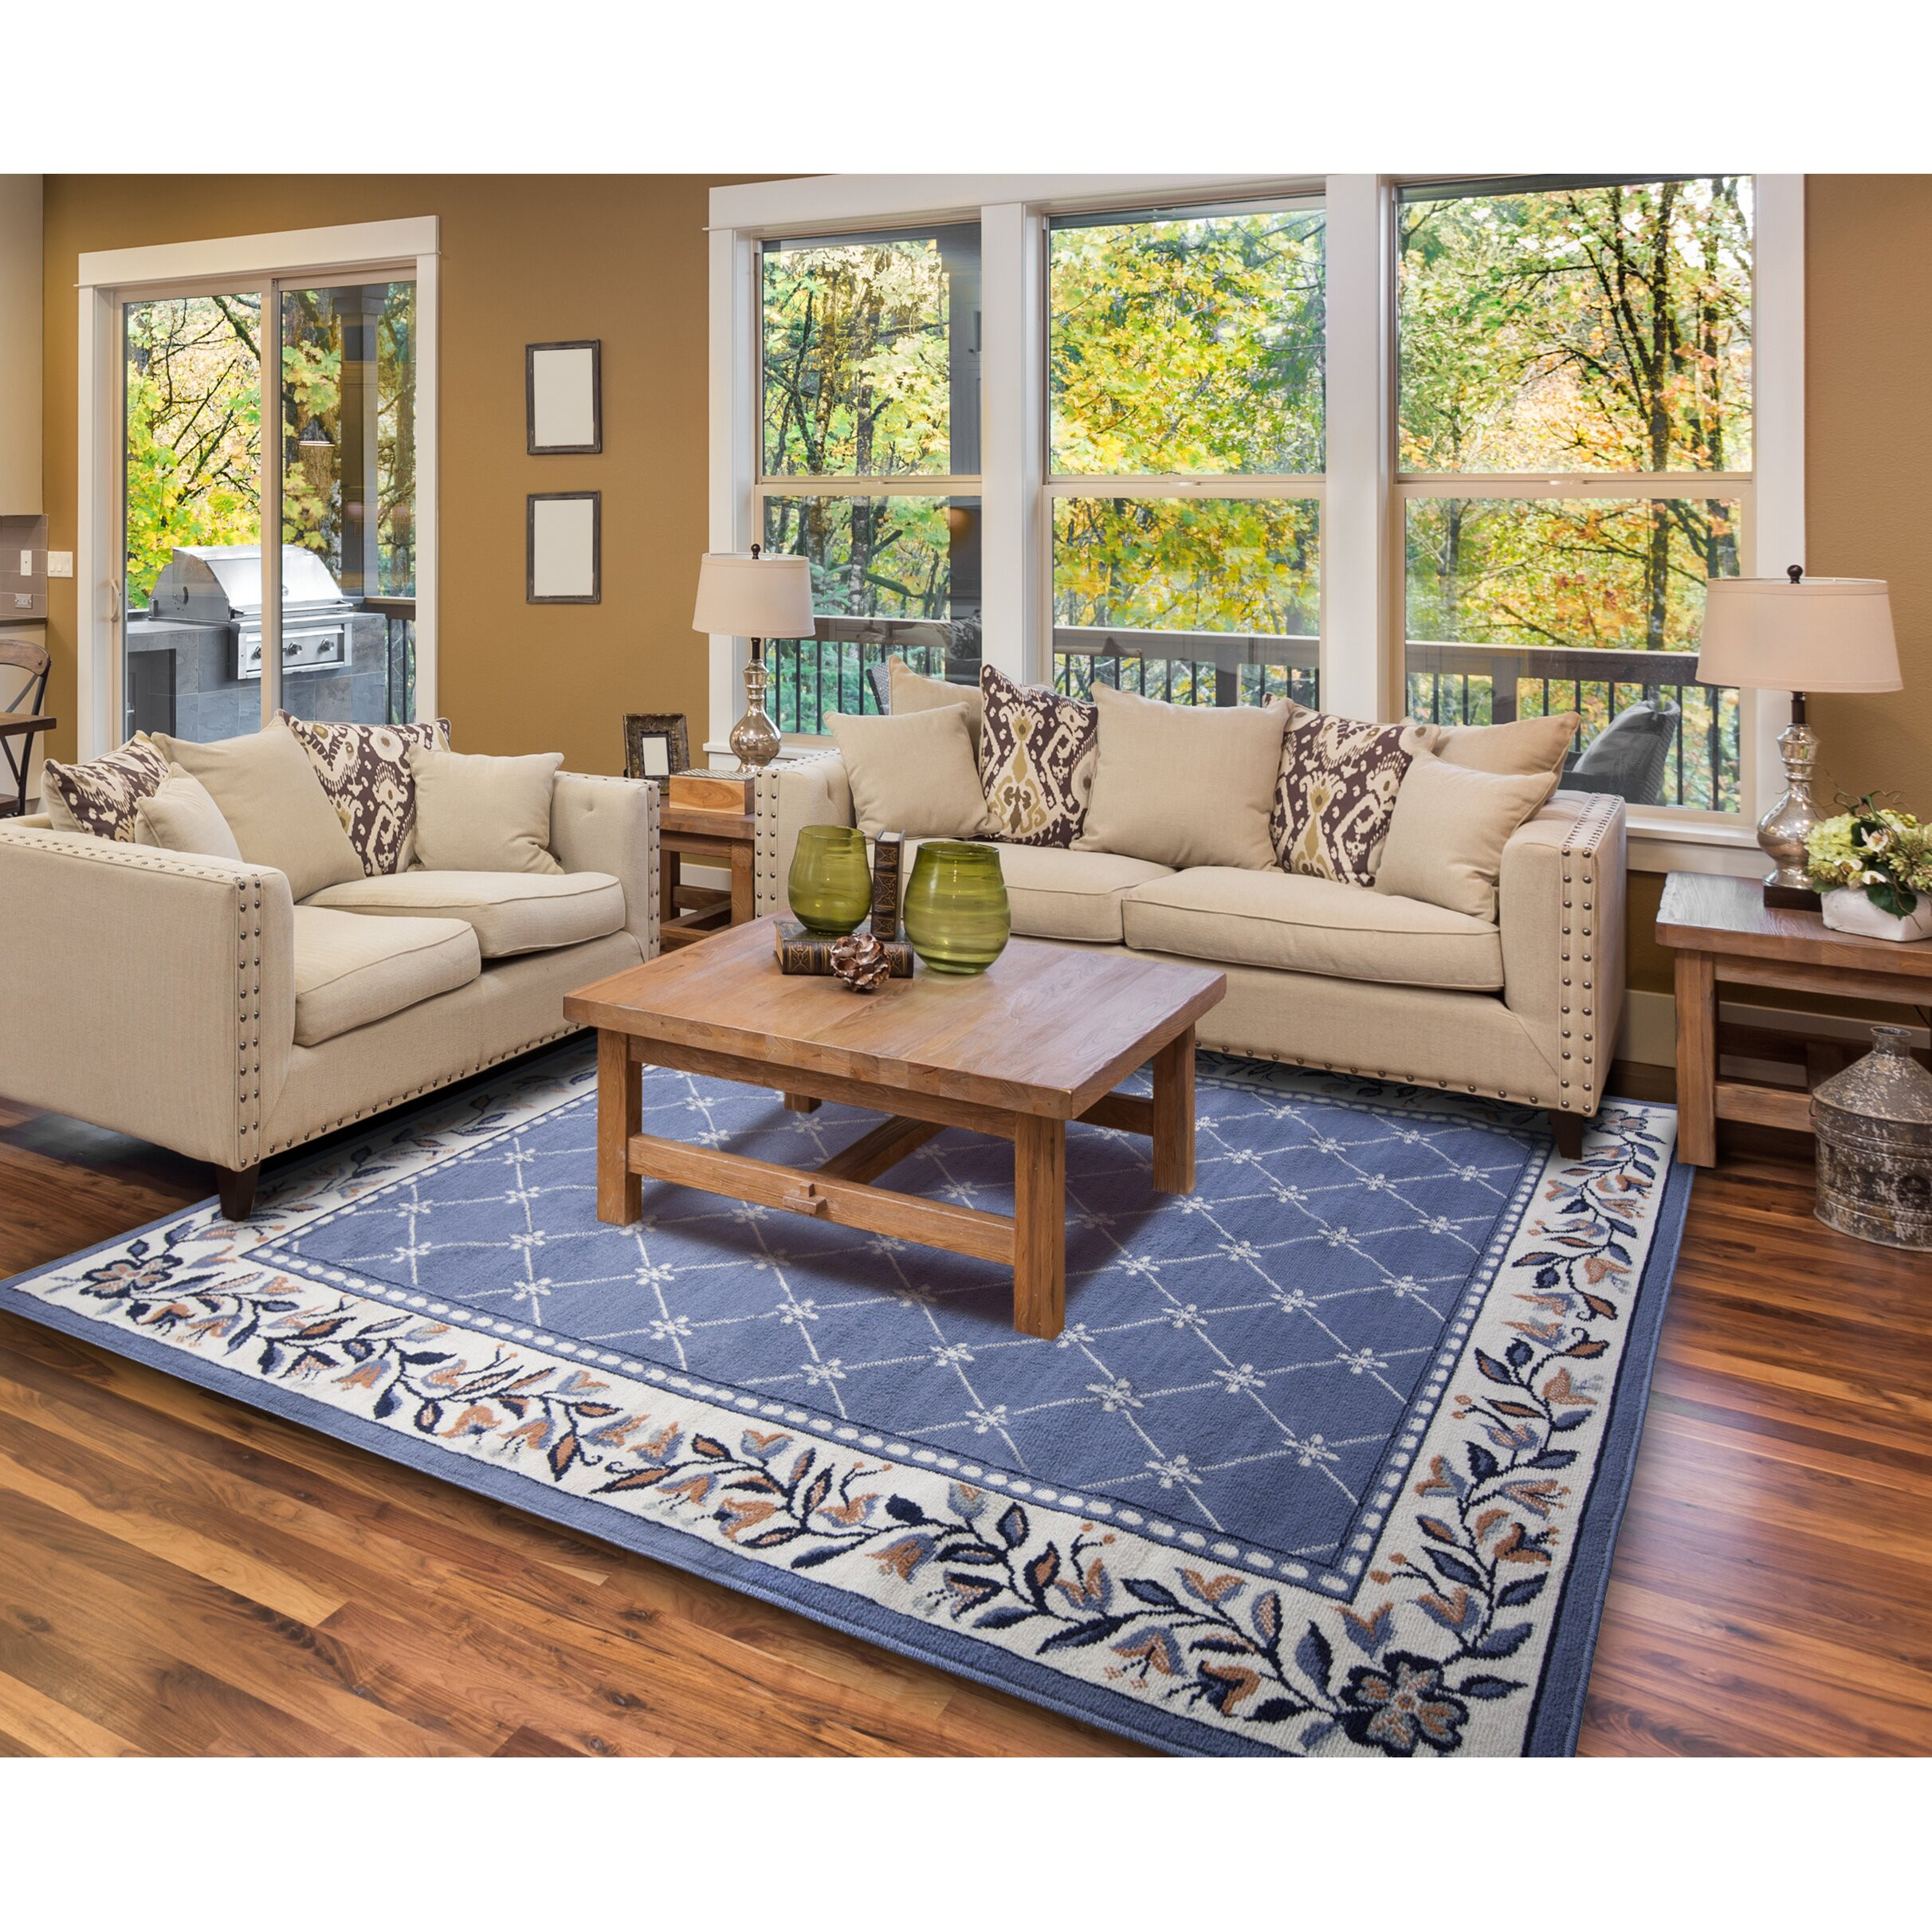 Wayfair Living Room Rugs
 Home Dynamix Geometric Country Blue Area Rug & Reviews